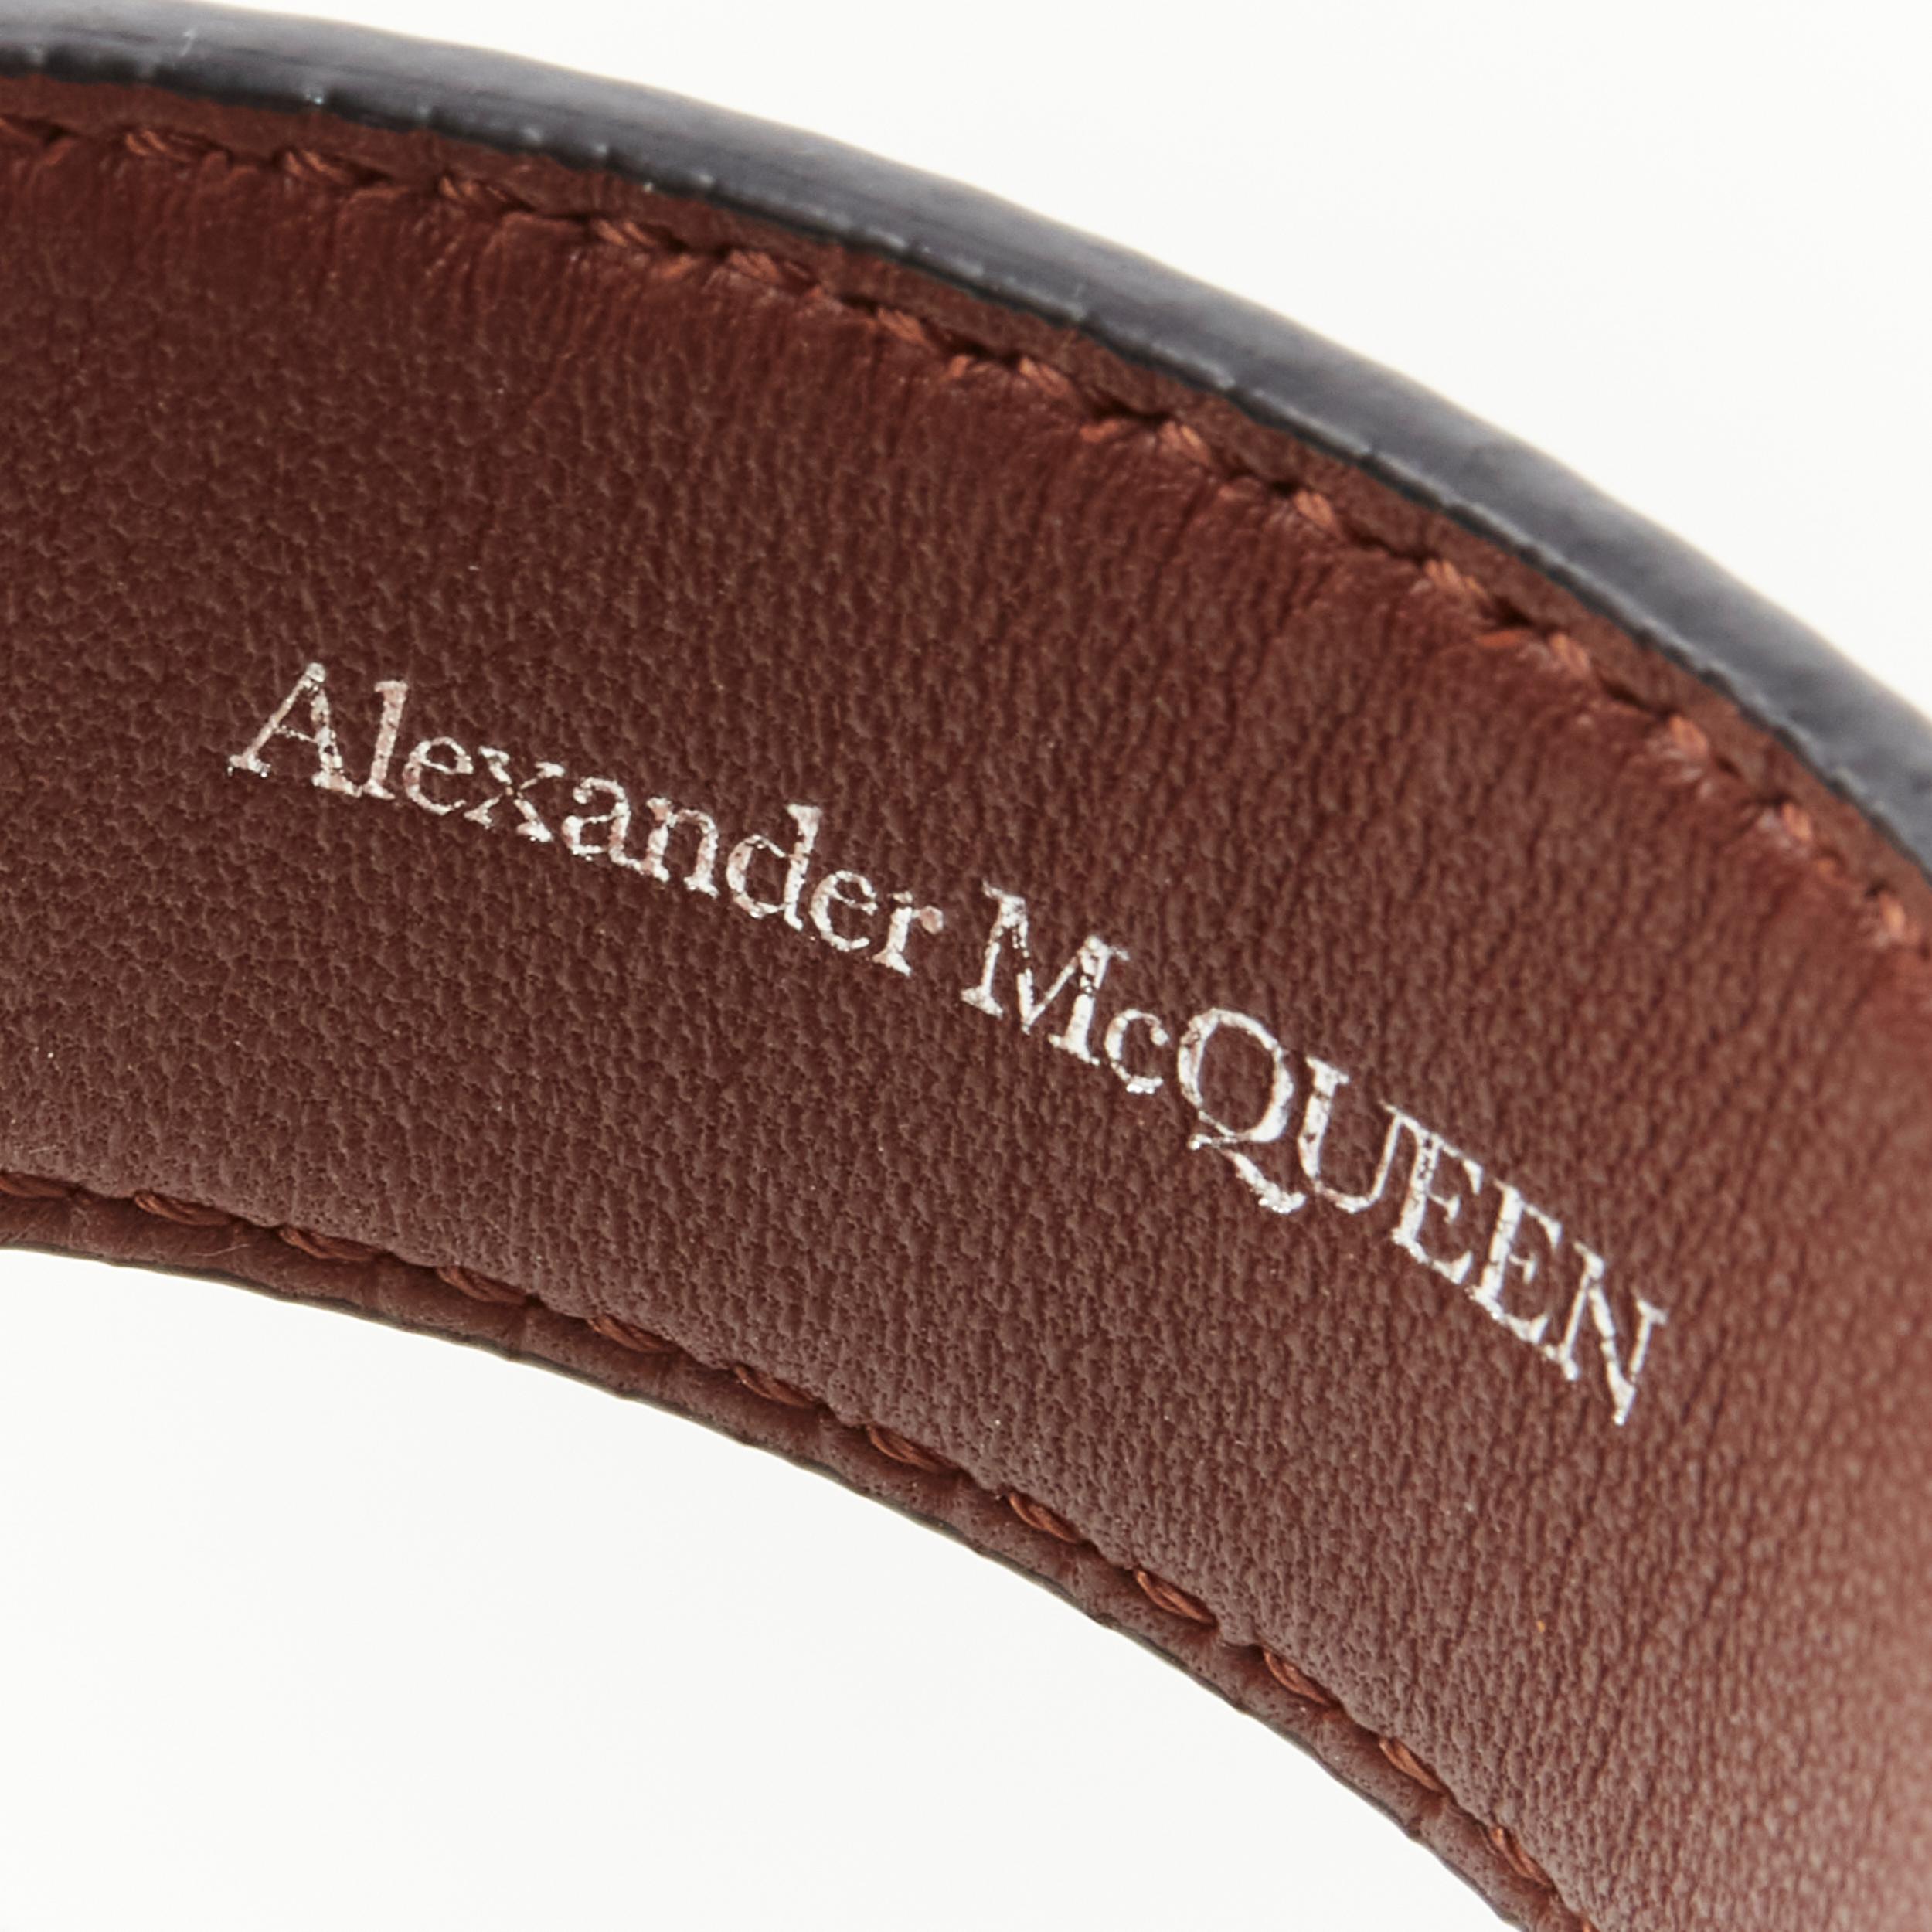 Black ALEXANDER MCQUEEN black rhinestone metal tip gold buckle leather cuff bracelet